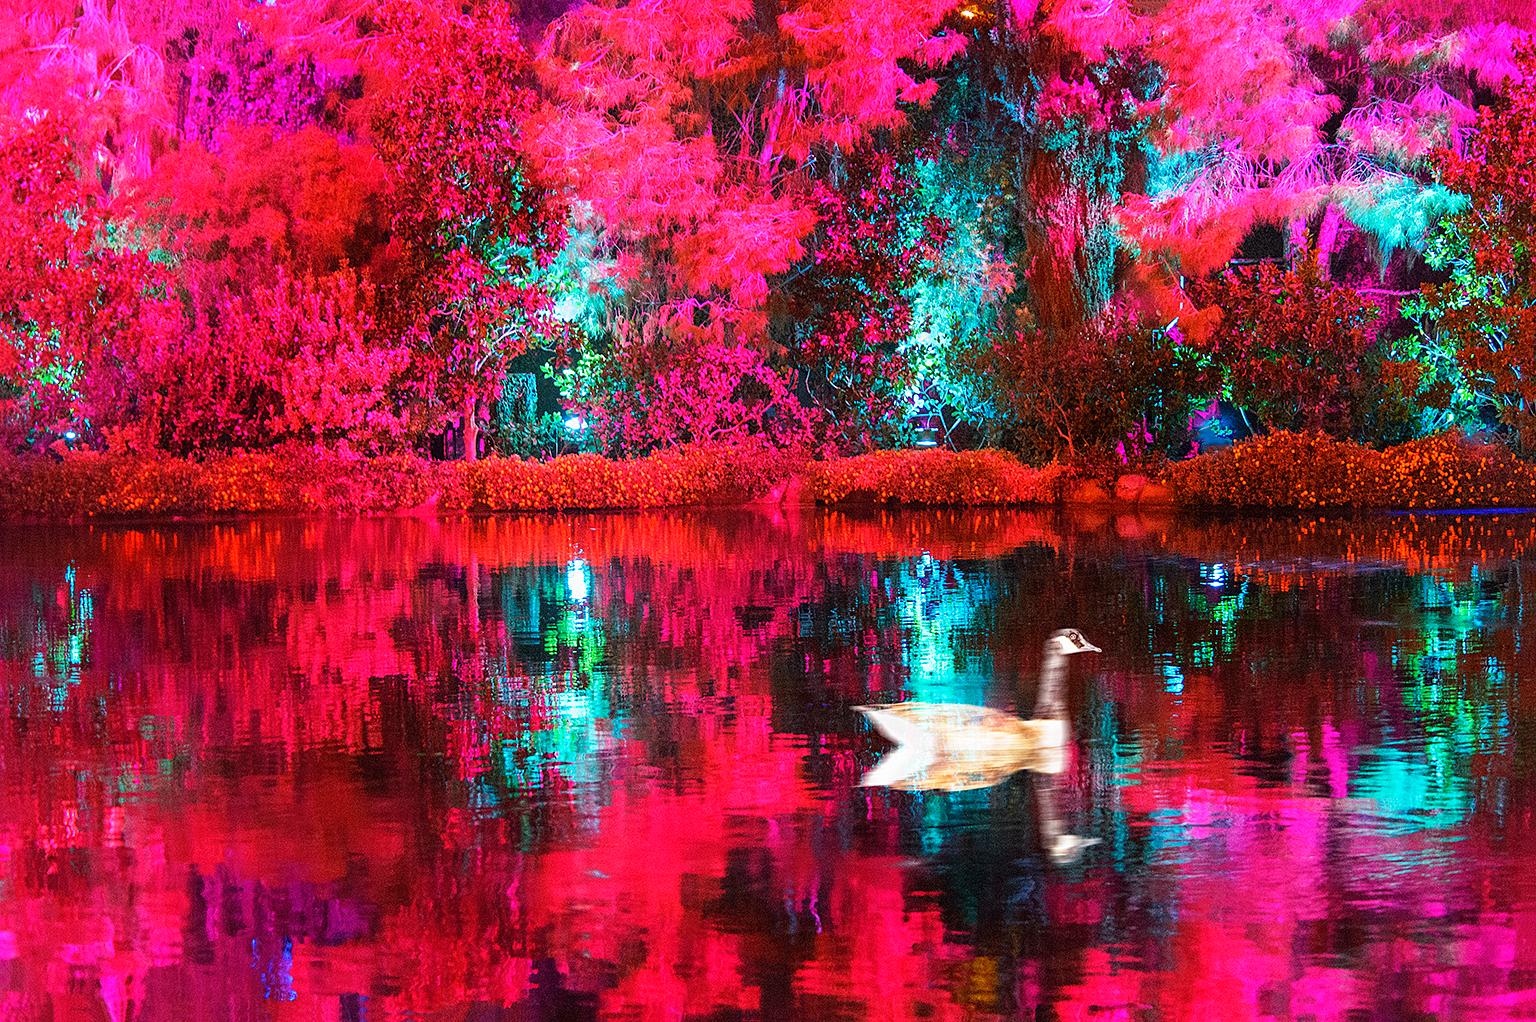 Mitchell Funk Landscape Photograph - Marbled Duck on a Dreamy Vermillion Pond